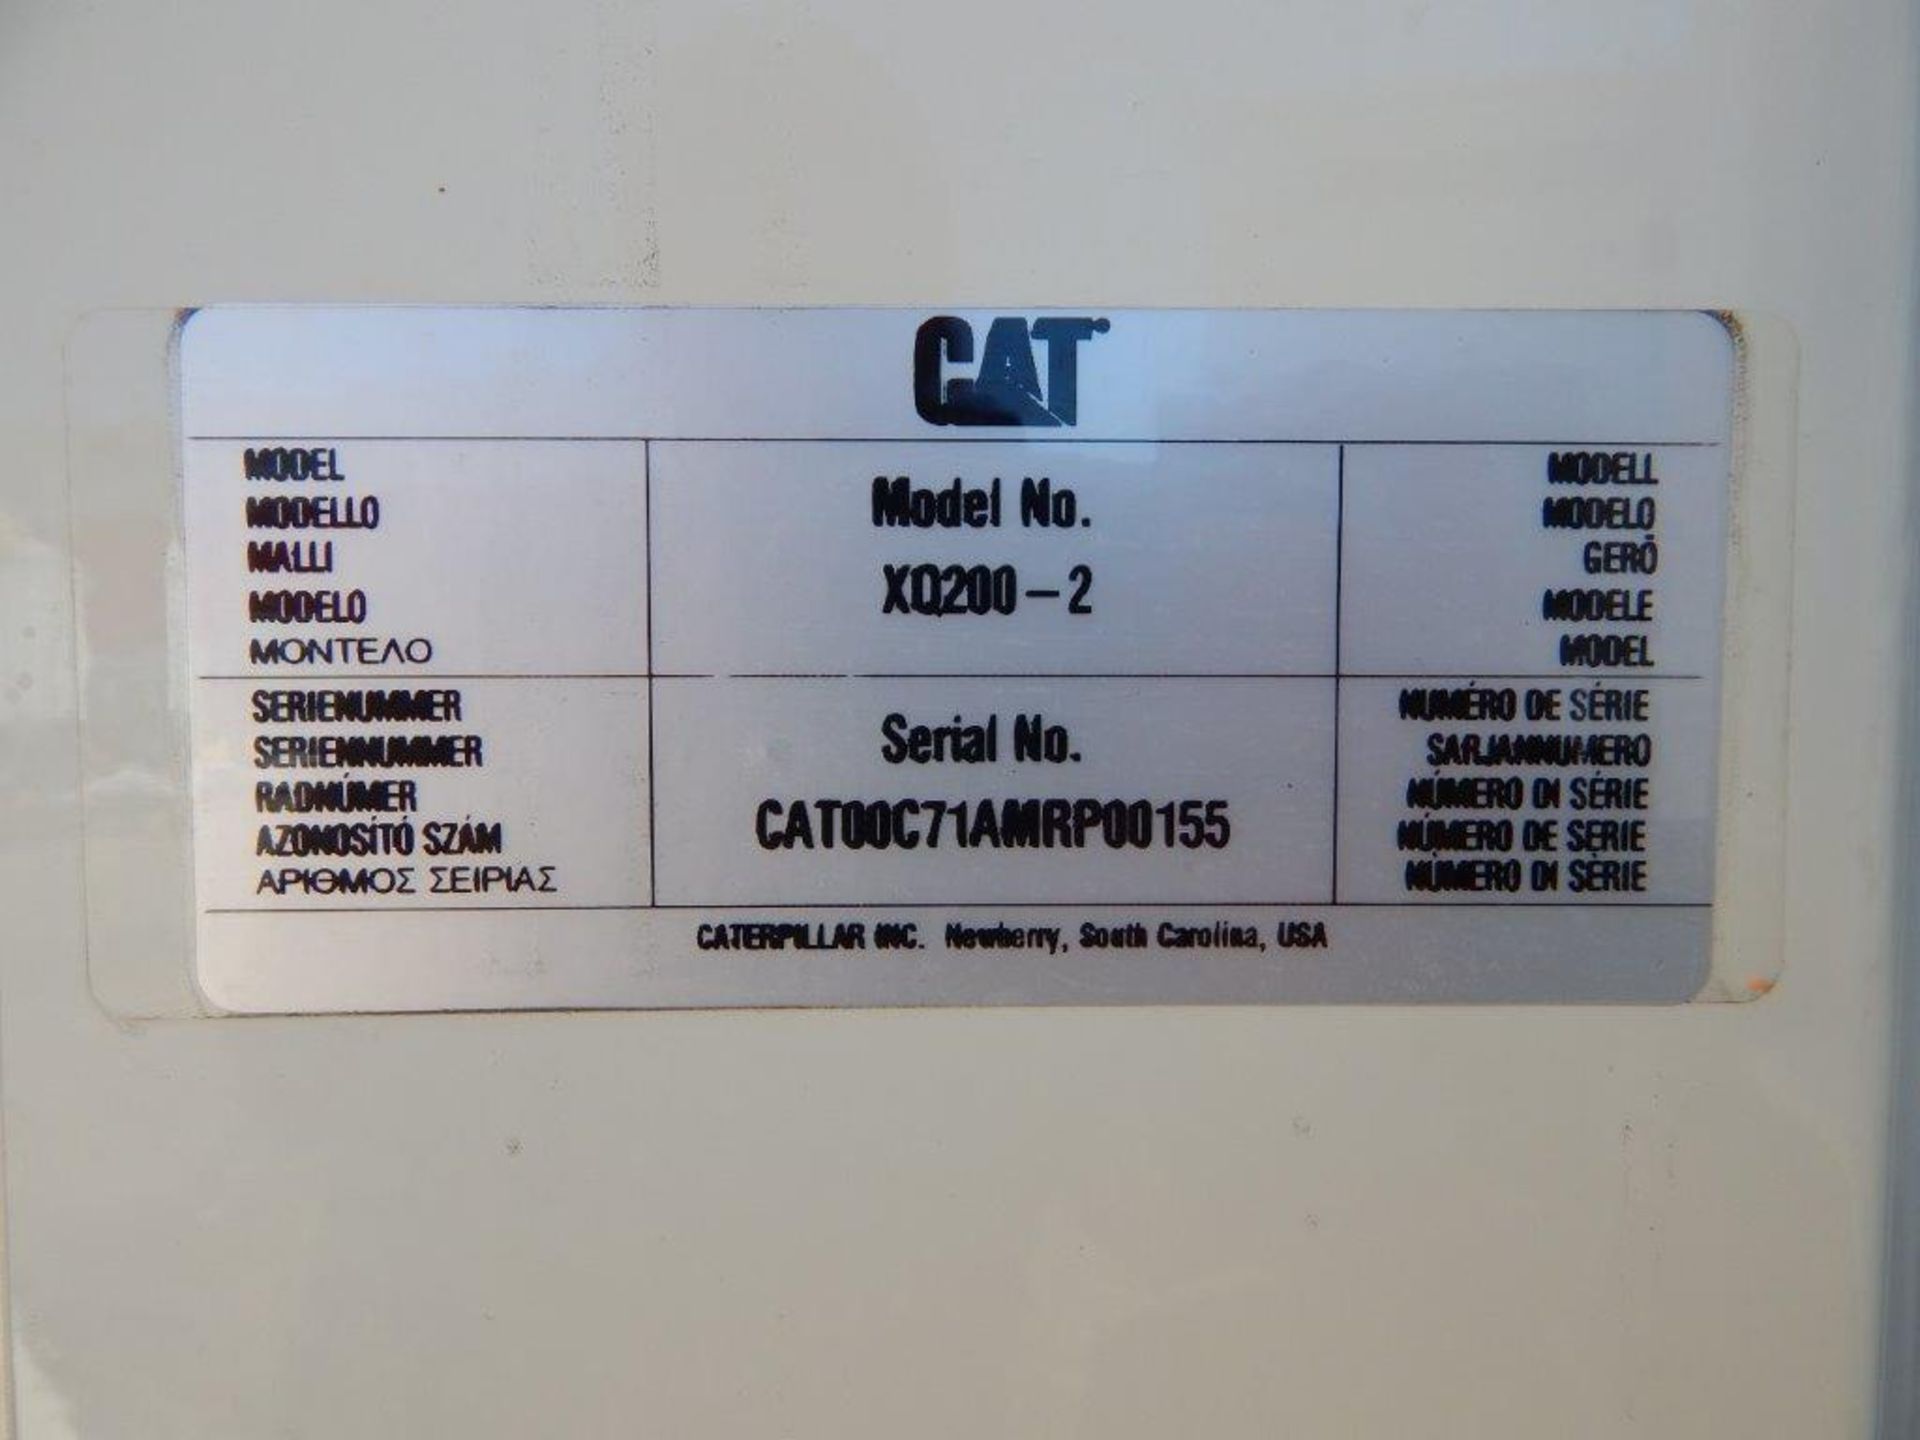 Caterpillar Model XQ200-2 Tier 4 Final Rental Grade 182 kW Portable Diesel Generator - Image 5 of 13